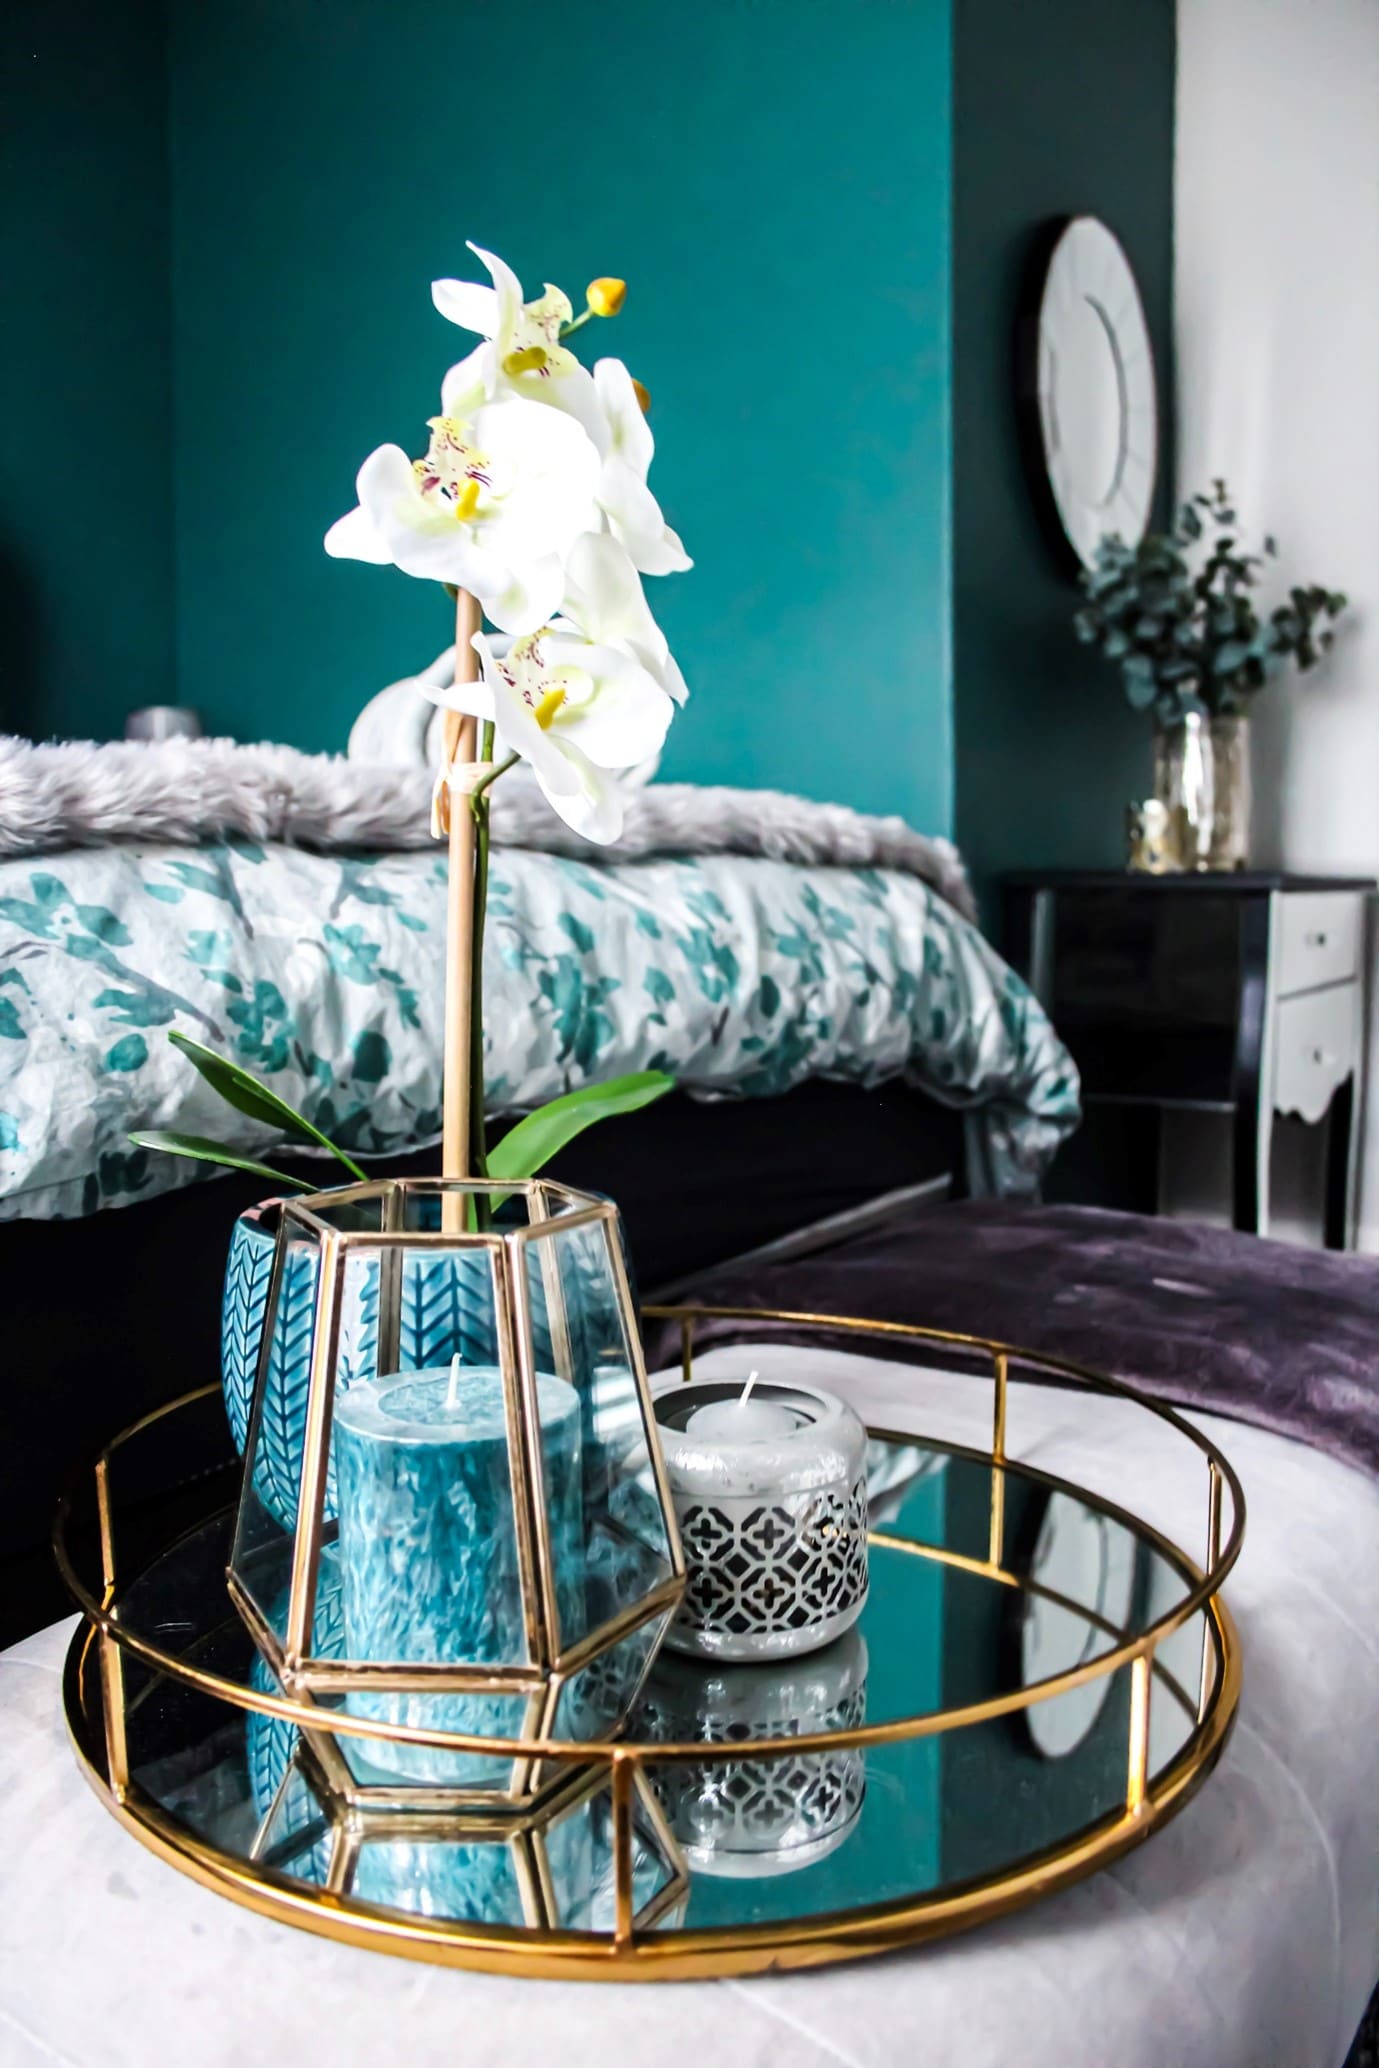 rose-gold-bedroom-accessories